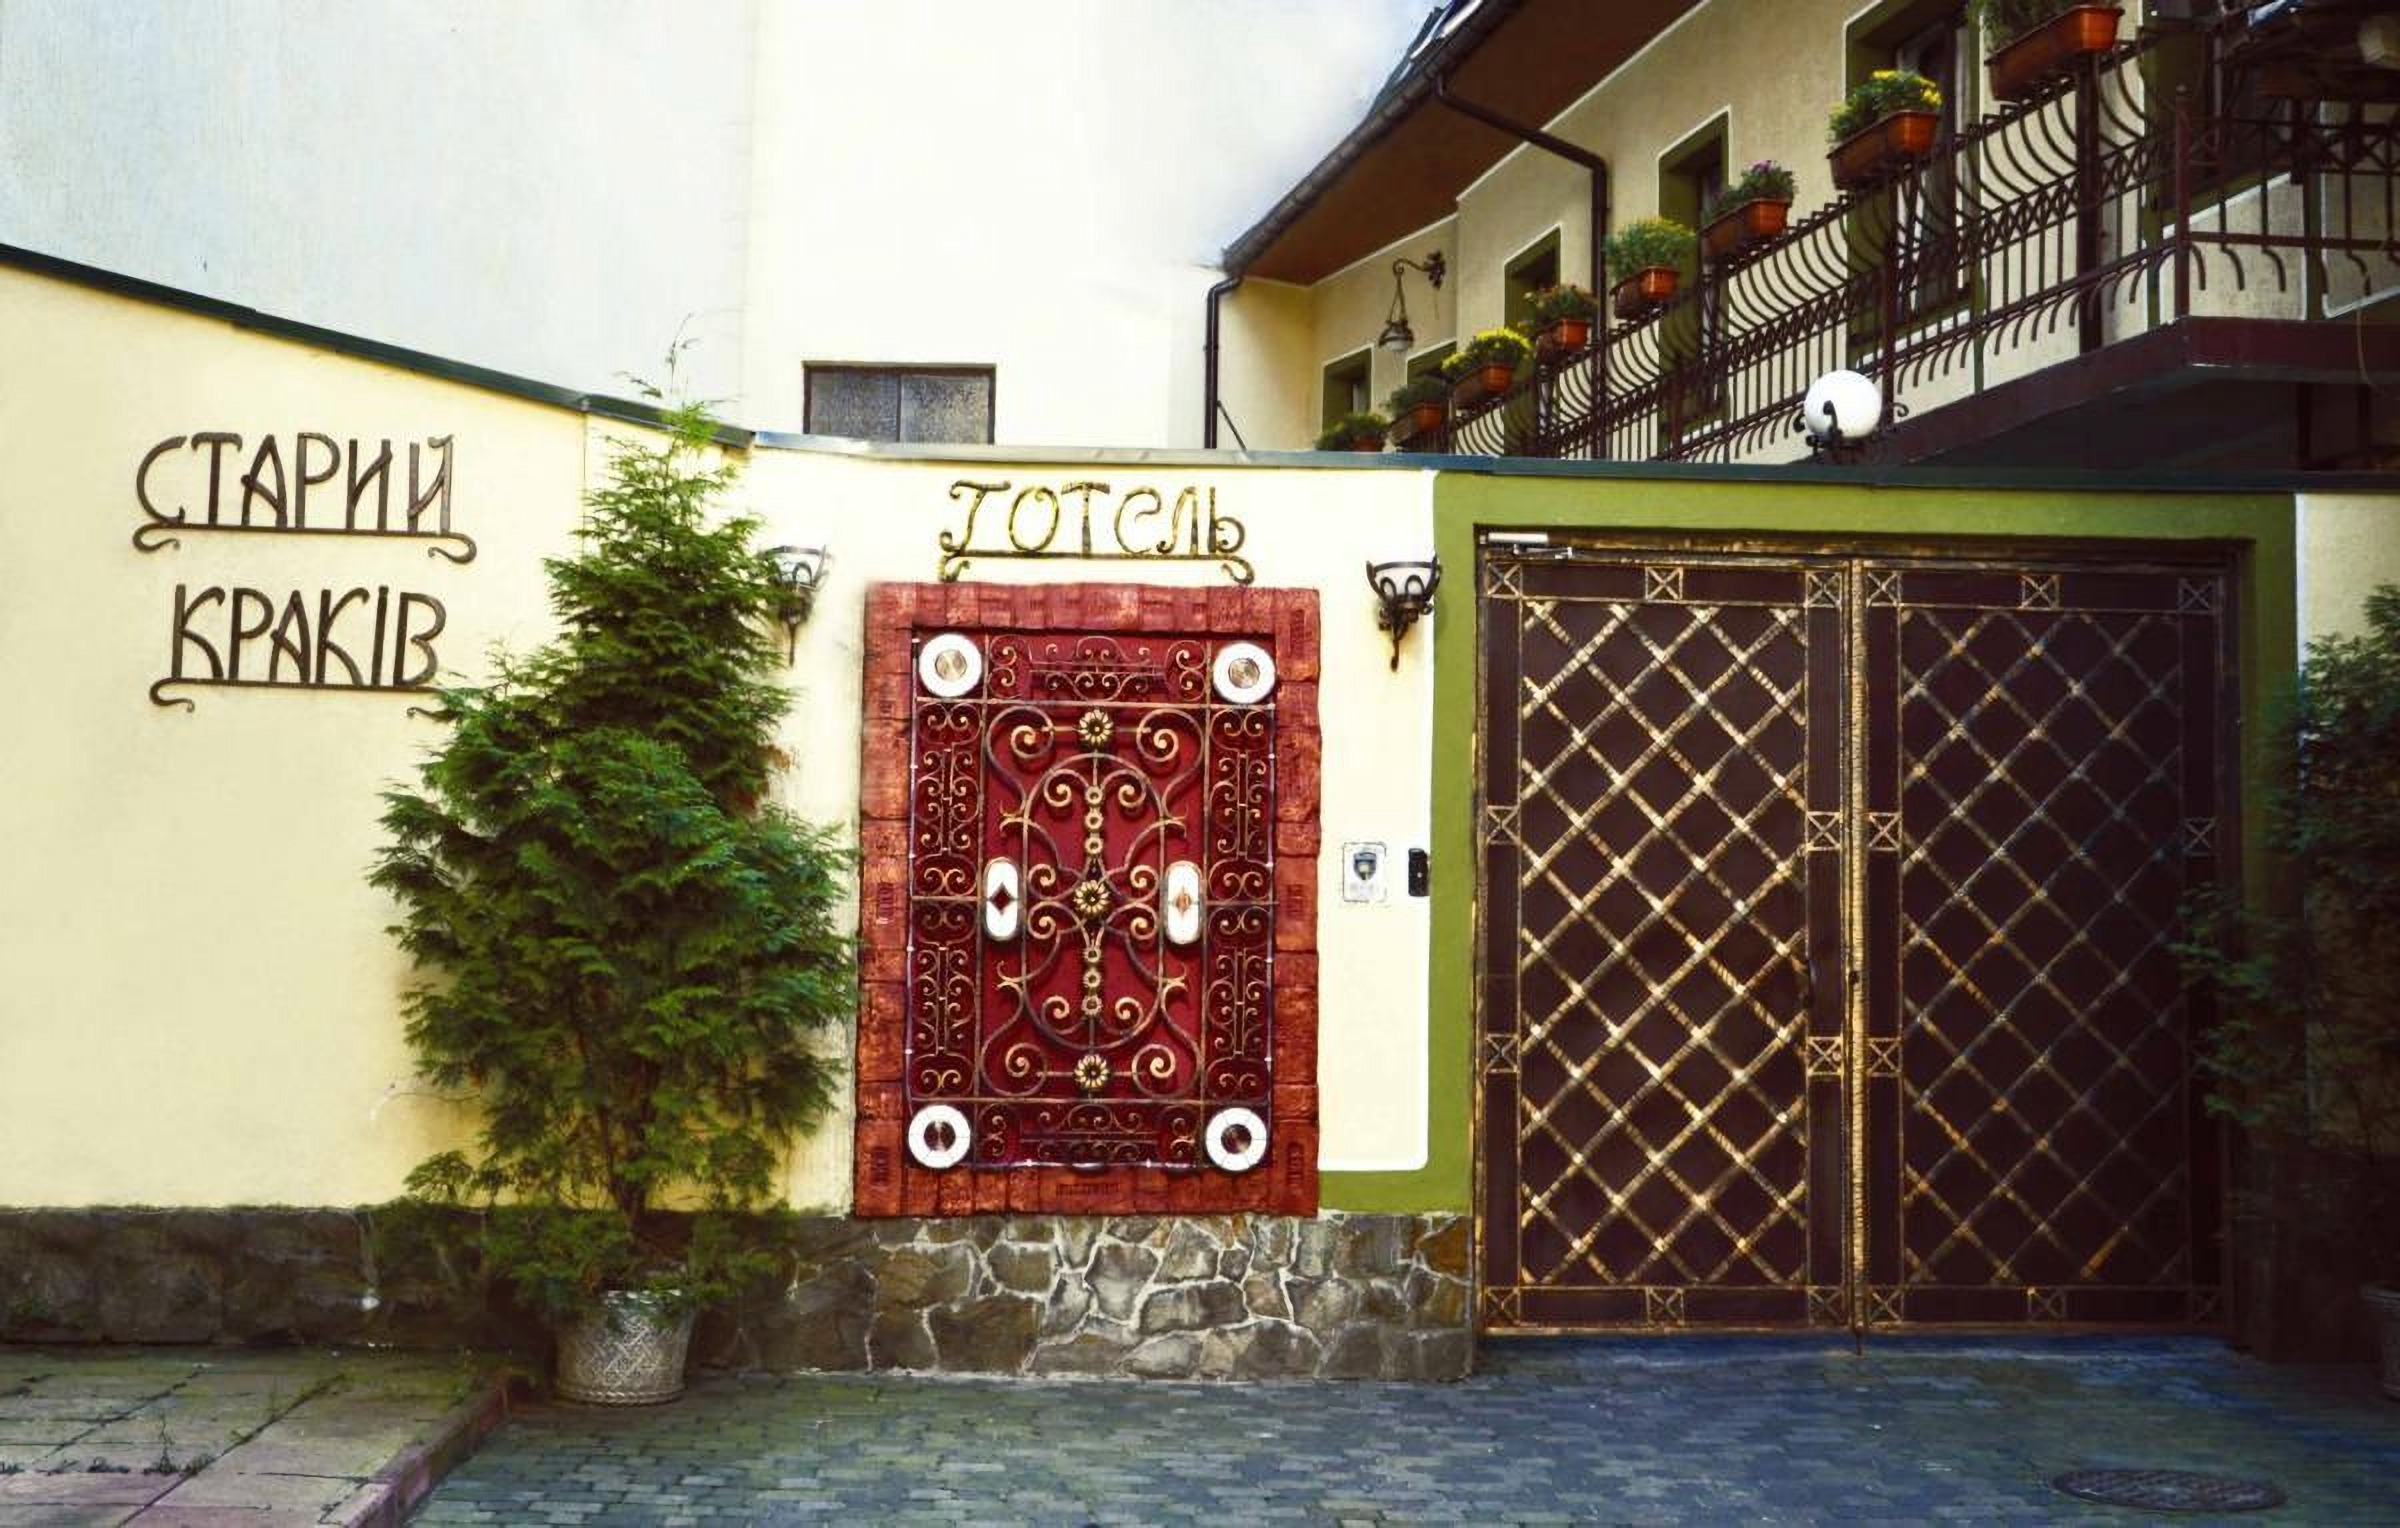 Entrance to the Old Krakow Hotel in Lviv Ukraine